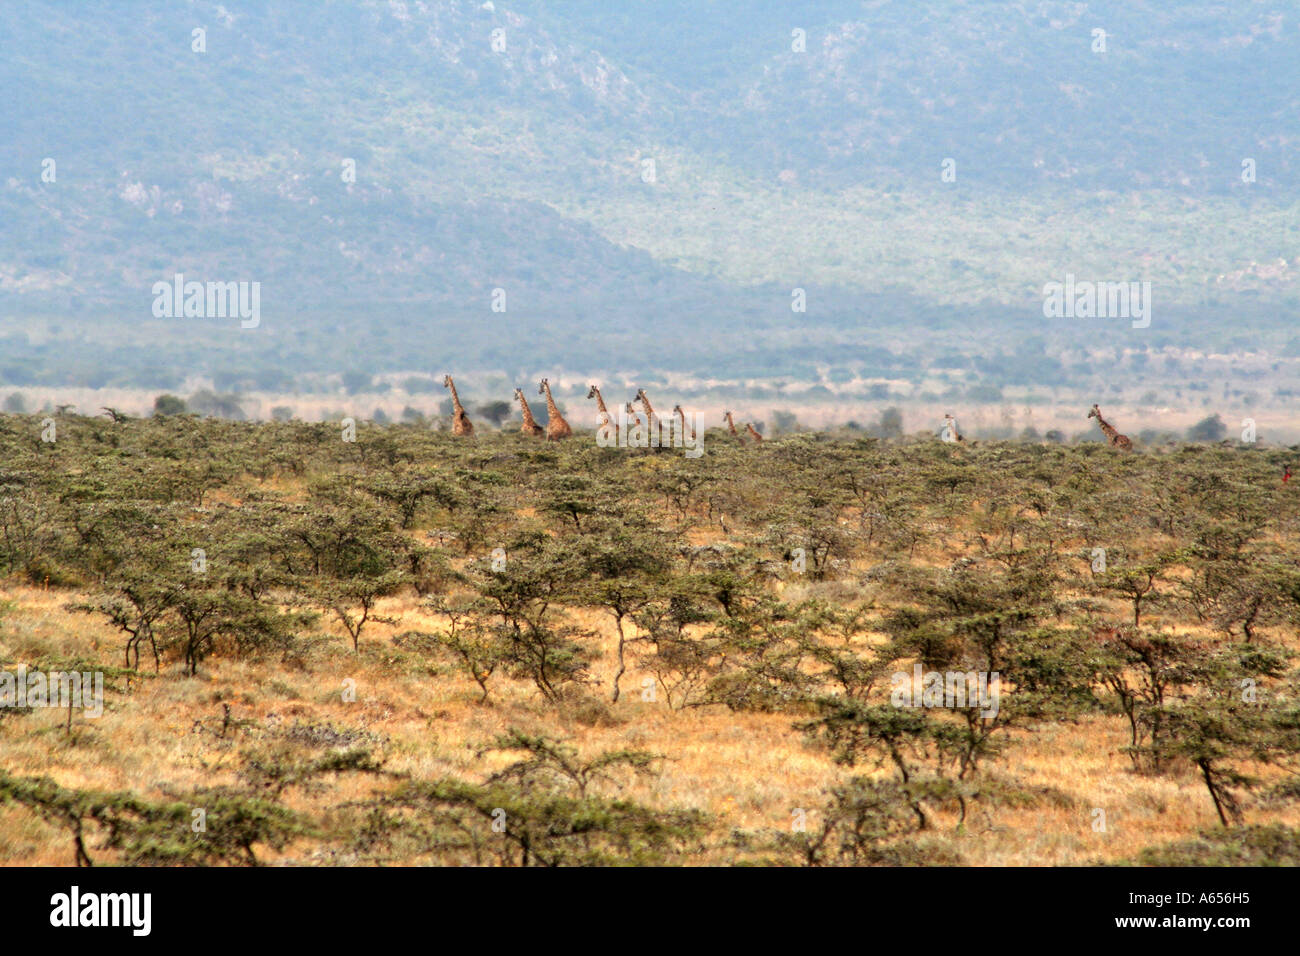 Kenya, Giraffe Herd in East Africa in the distance Stock Photo